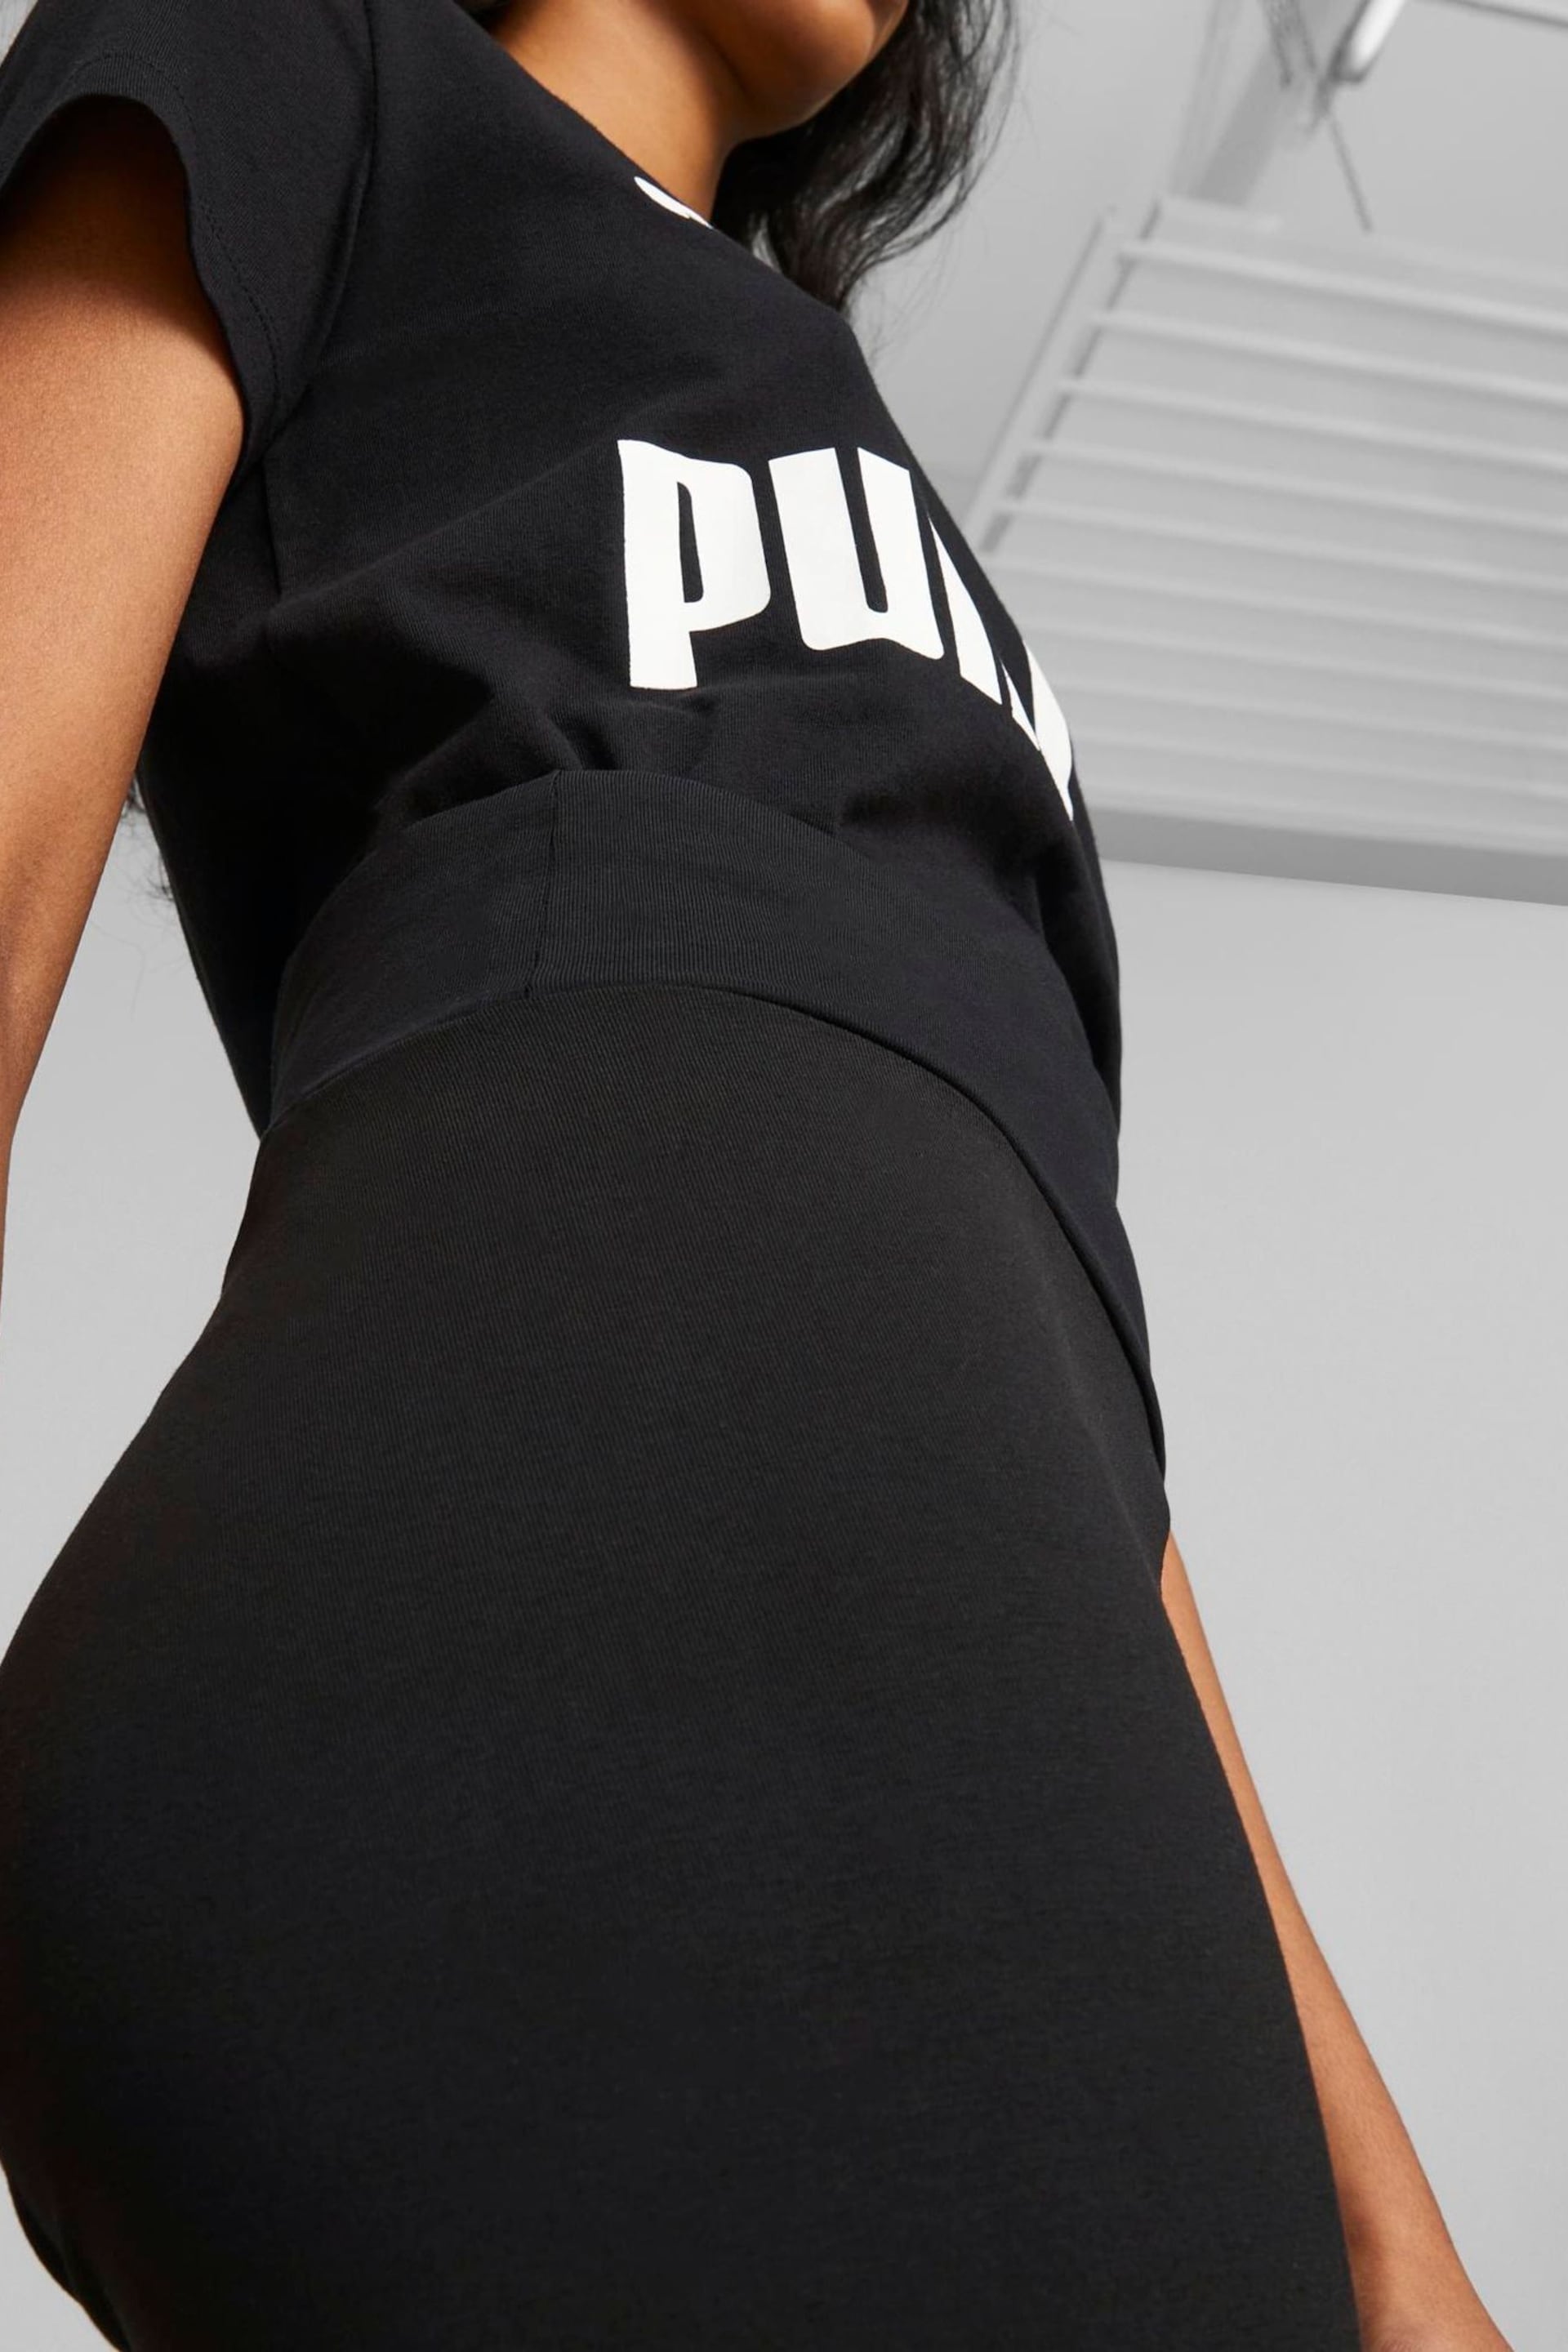 Puma Black Classics Womens Short Leggings - Image 4 of 5